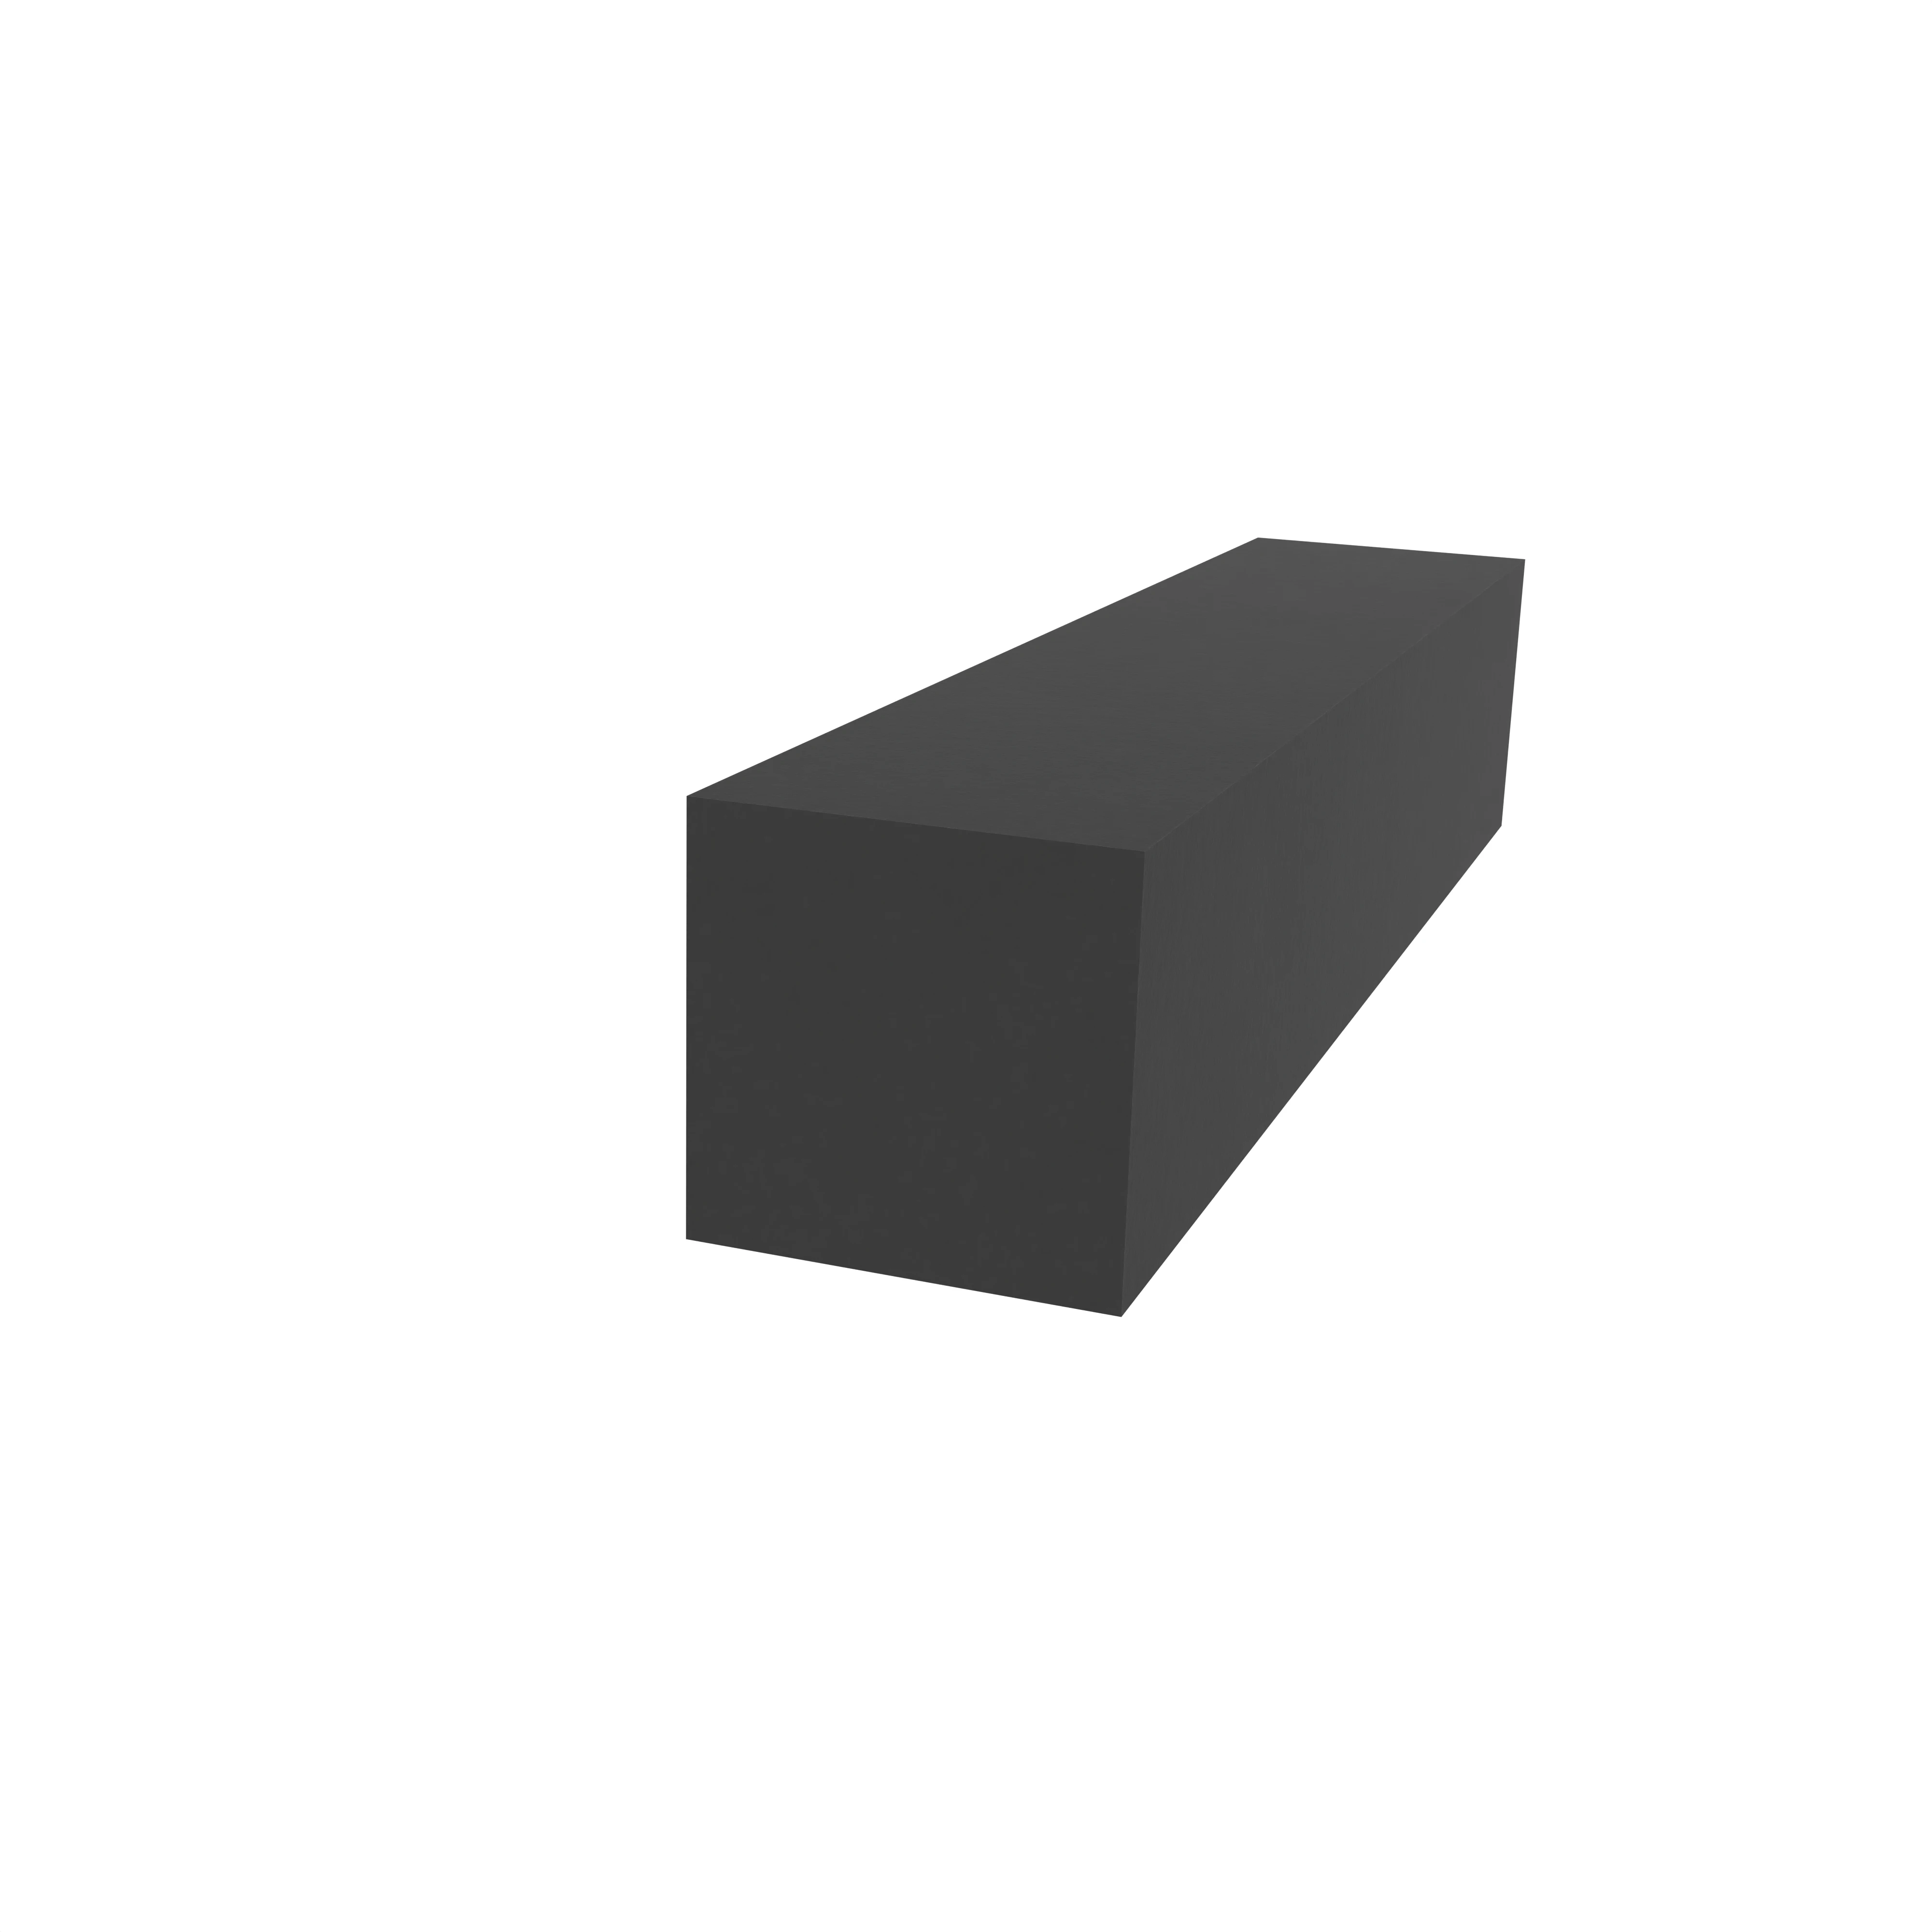 Moosgummidichtung vierkant | 8 mm Höhe | Farbe: schwarz